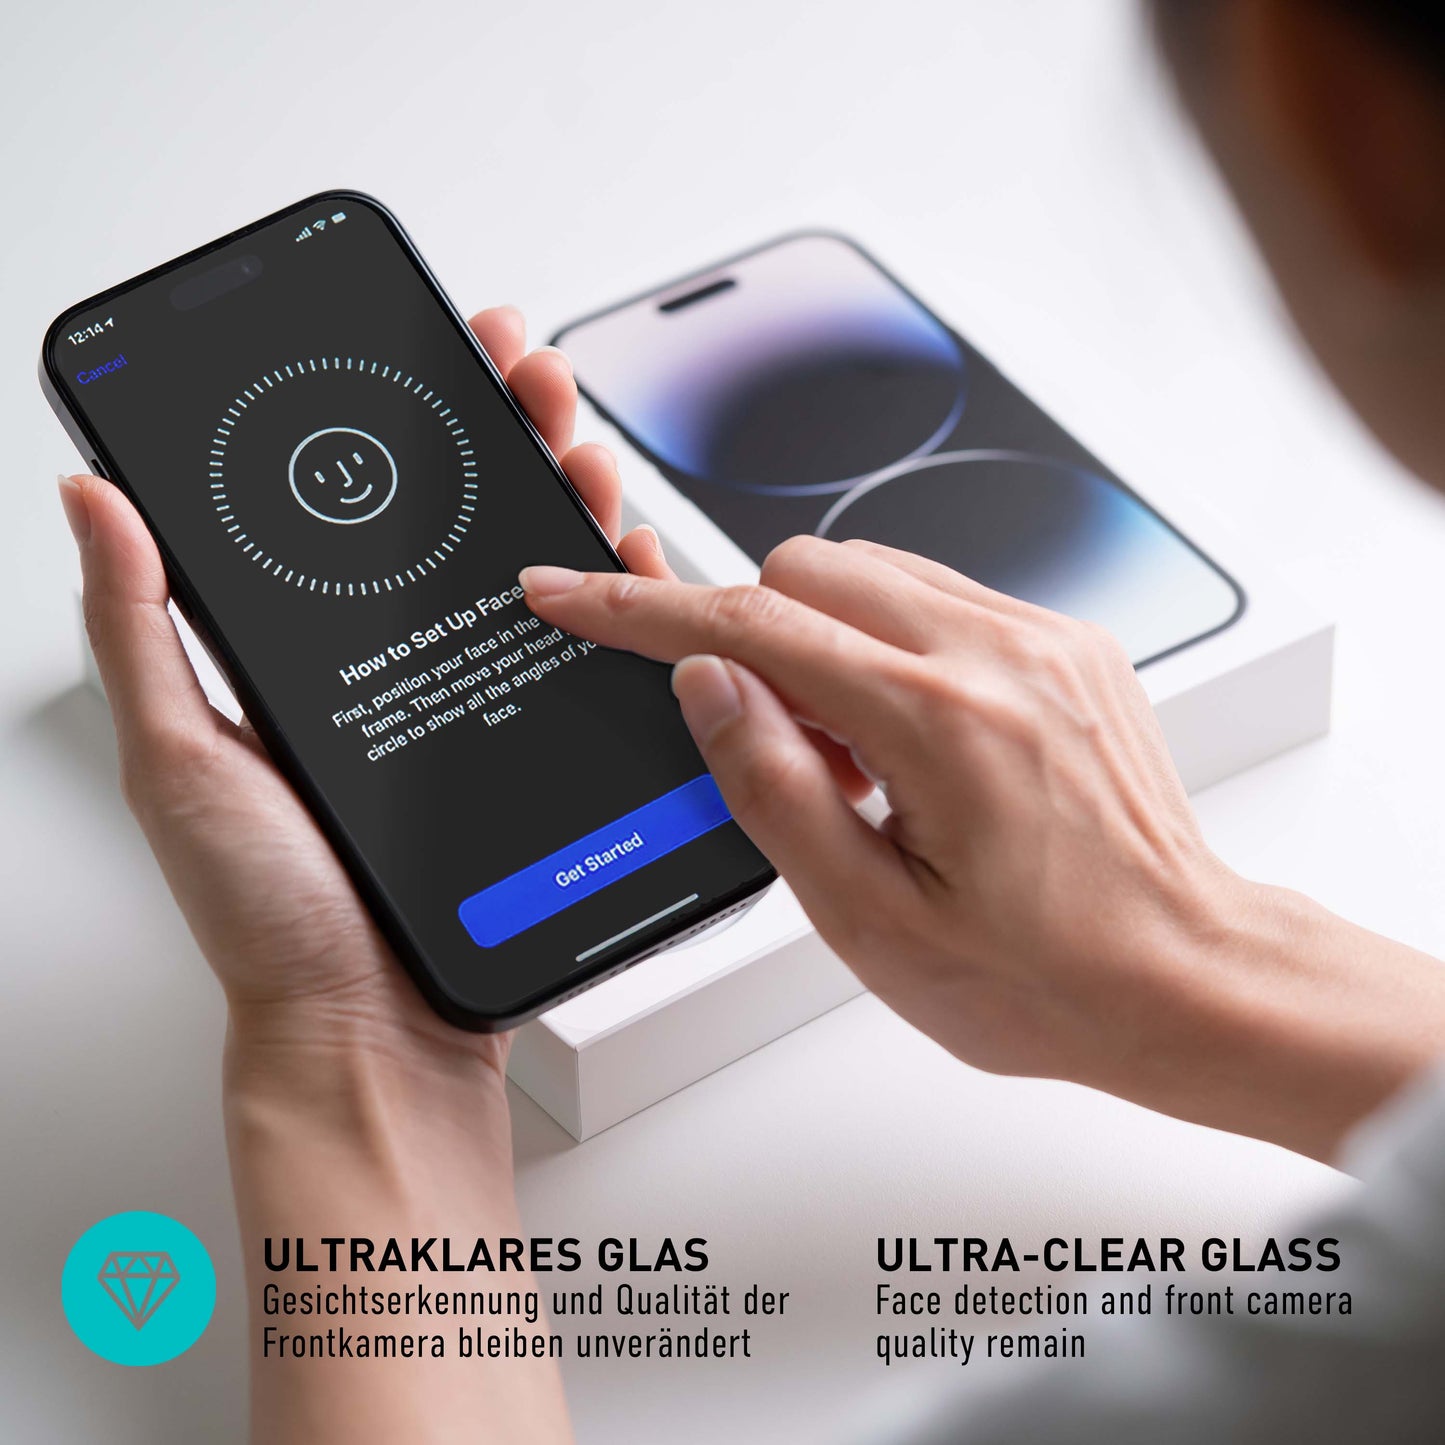 smartect Schutzglas Klar für Samsung Galaxy A50 / A50s / M30s / M31 / M21, 3 Stück